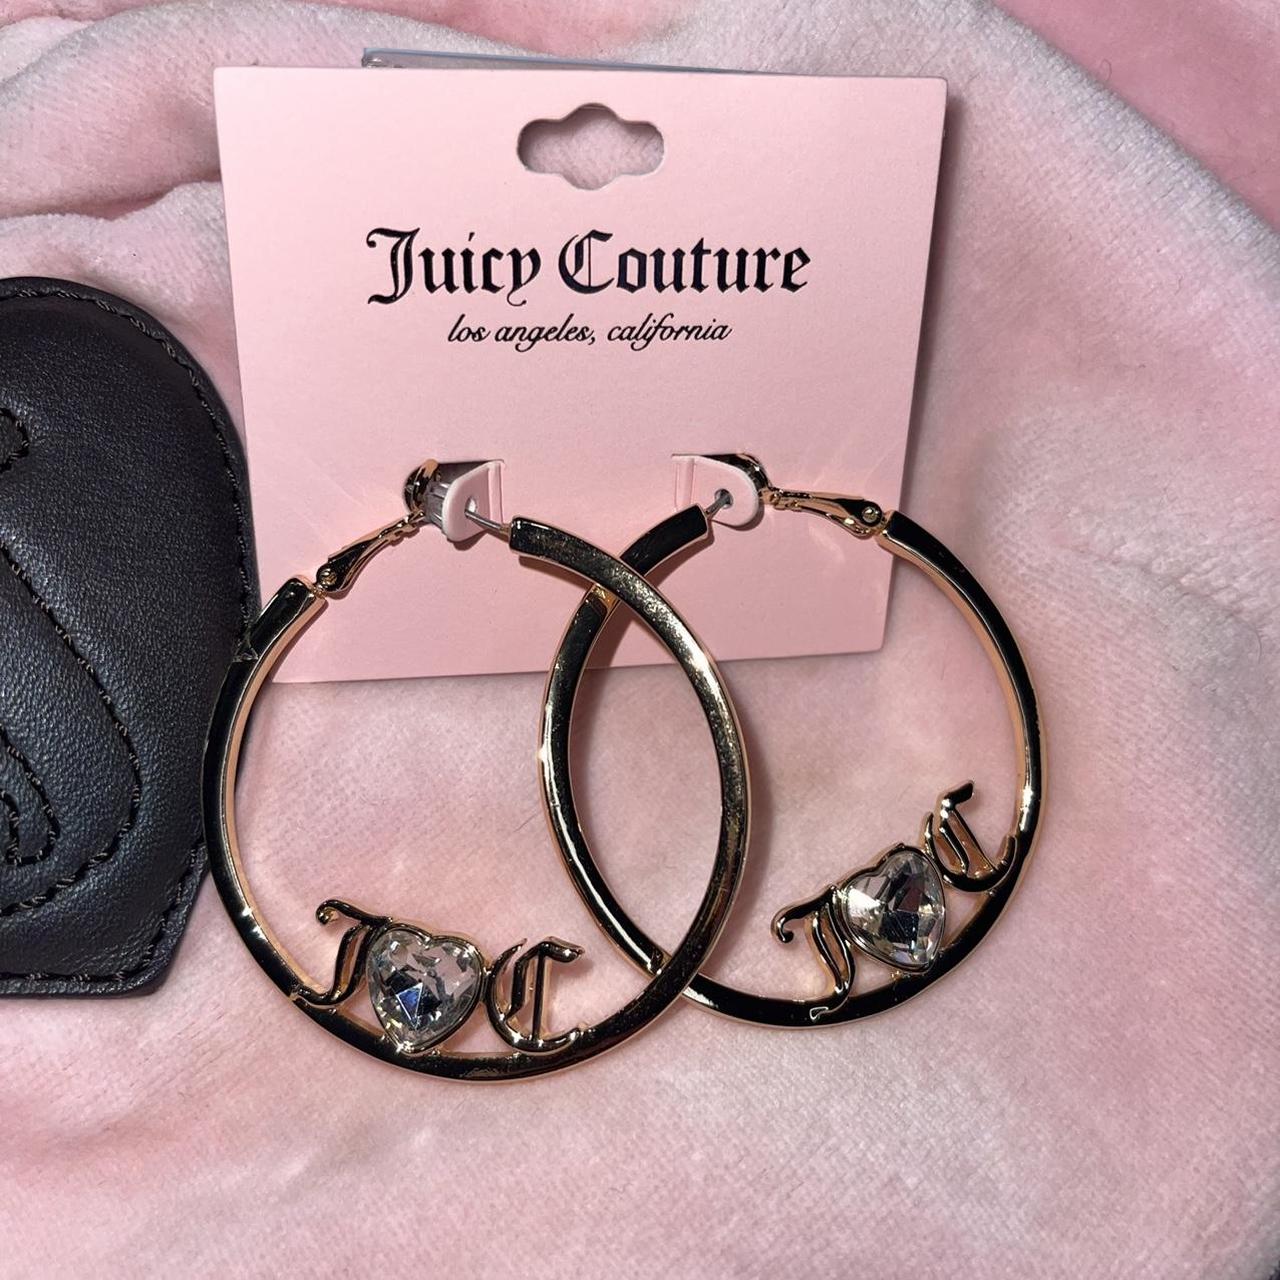 BRAND NEW!!! Juicy couture size medium Do bundles!! - Depop